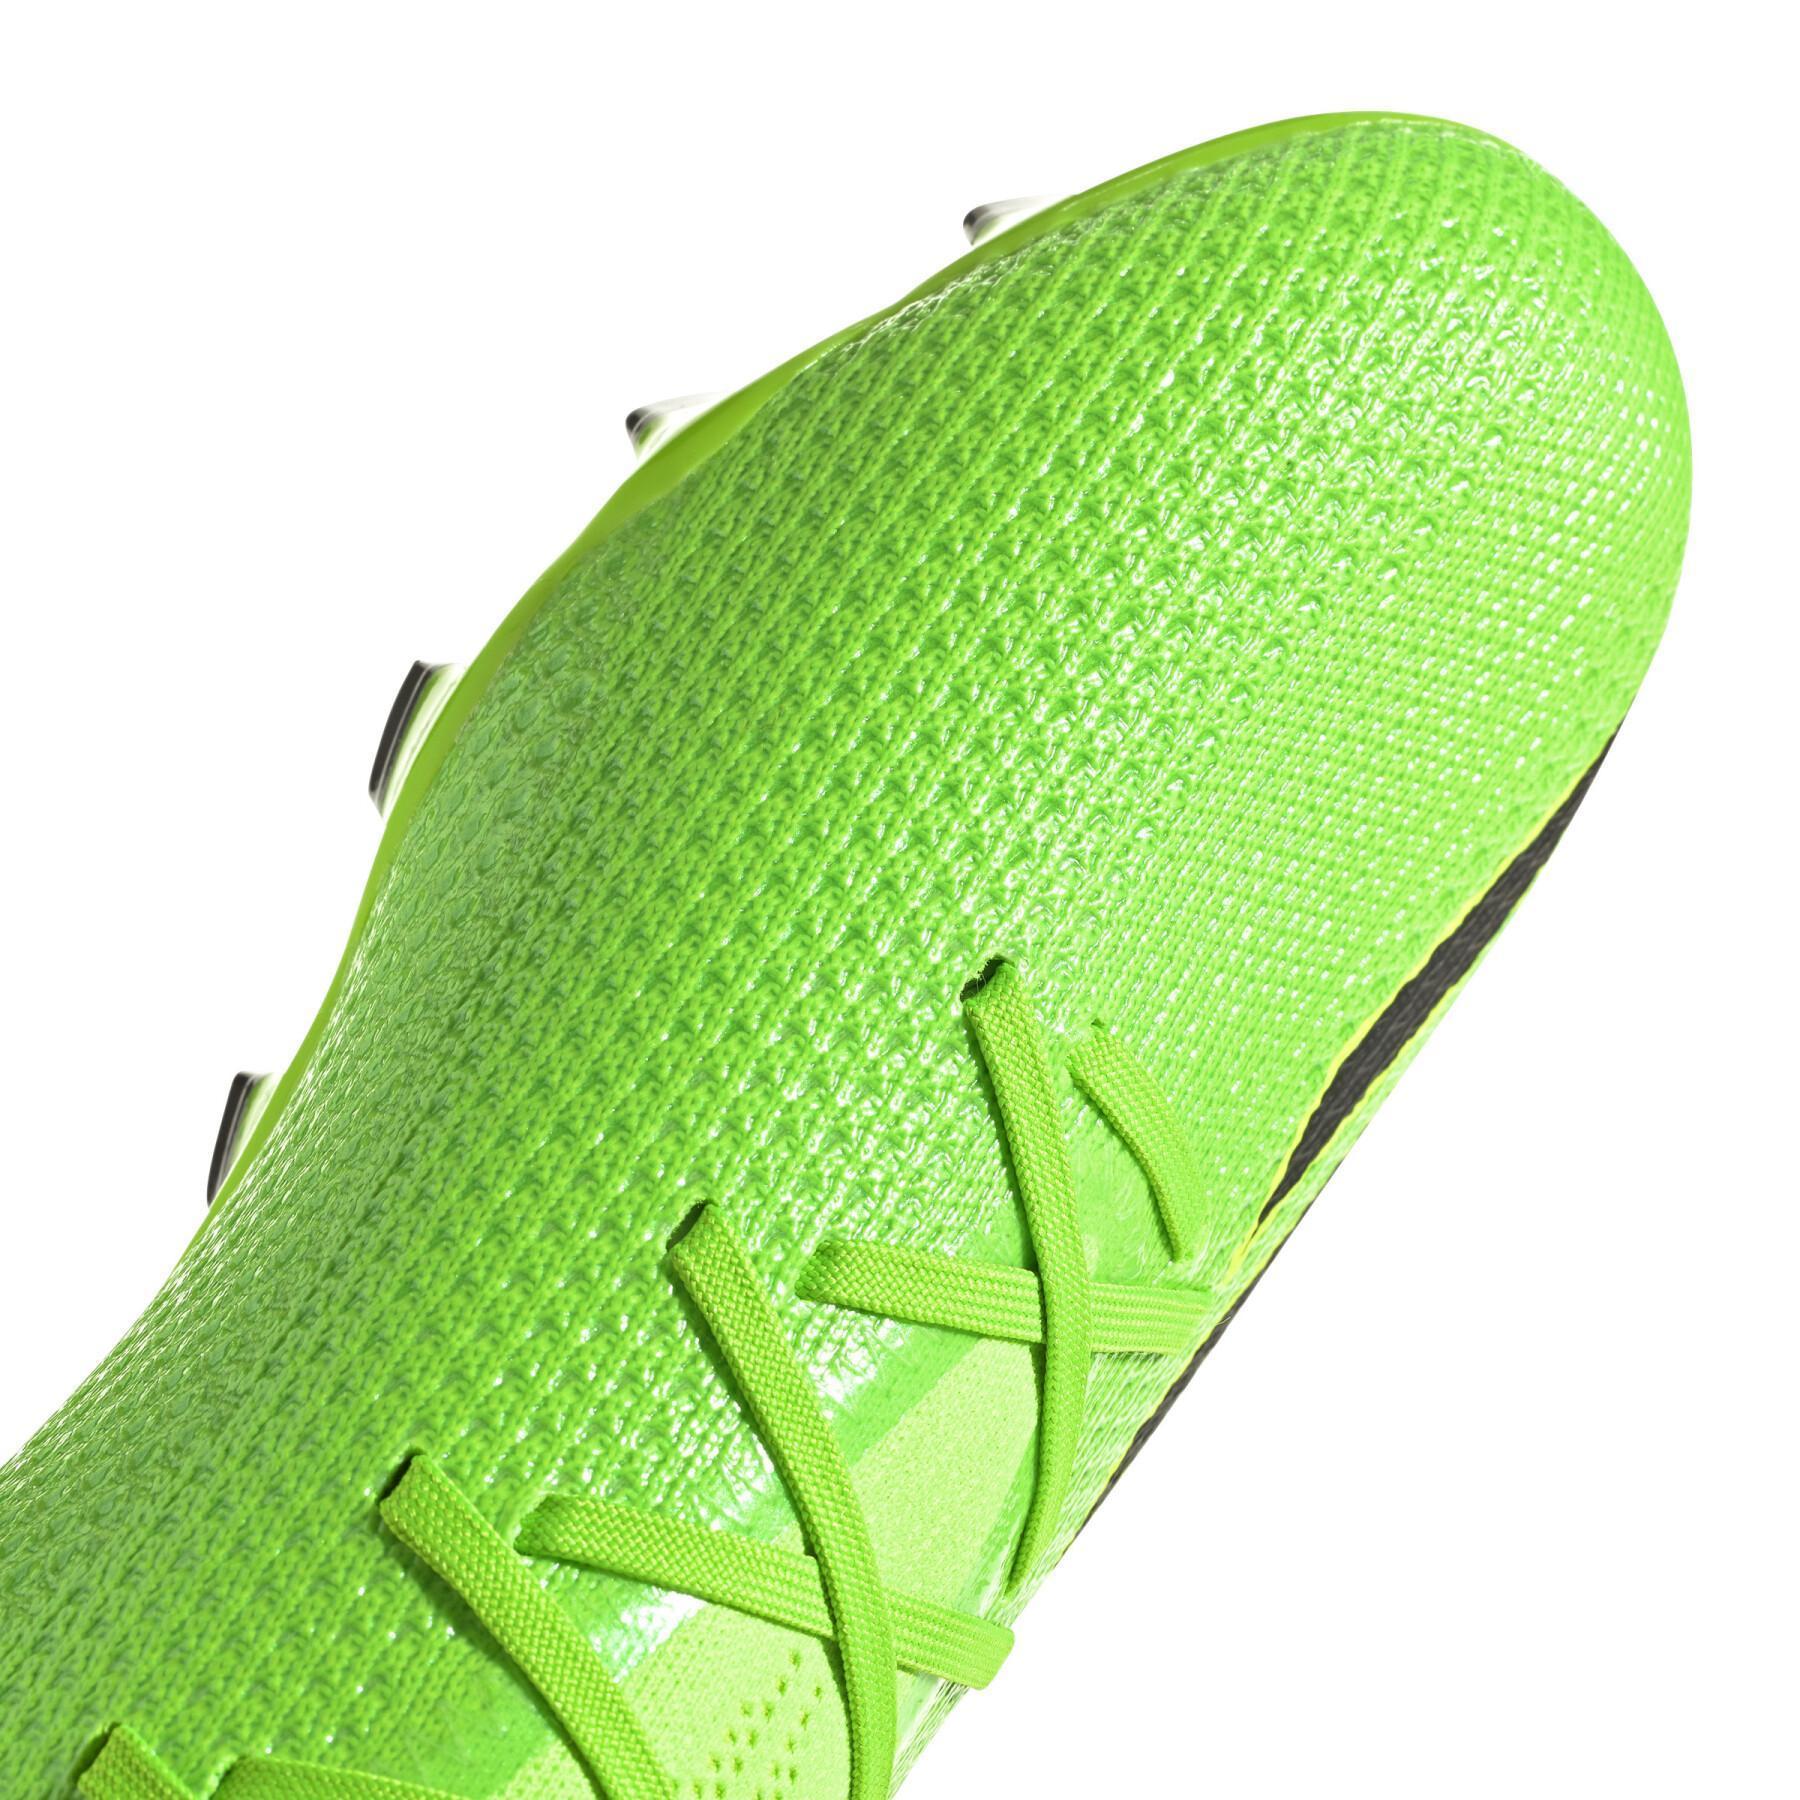 Soccer shoes adidas X Speedportal.2 MG - Game Data Pack